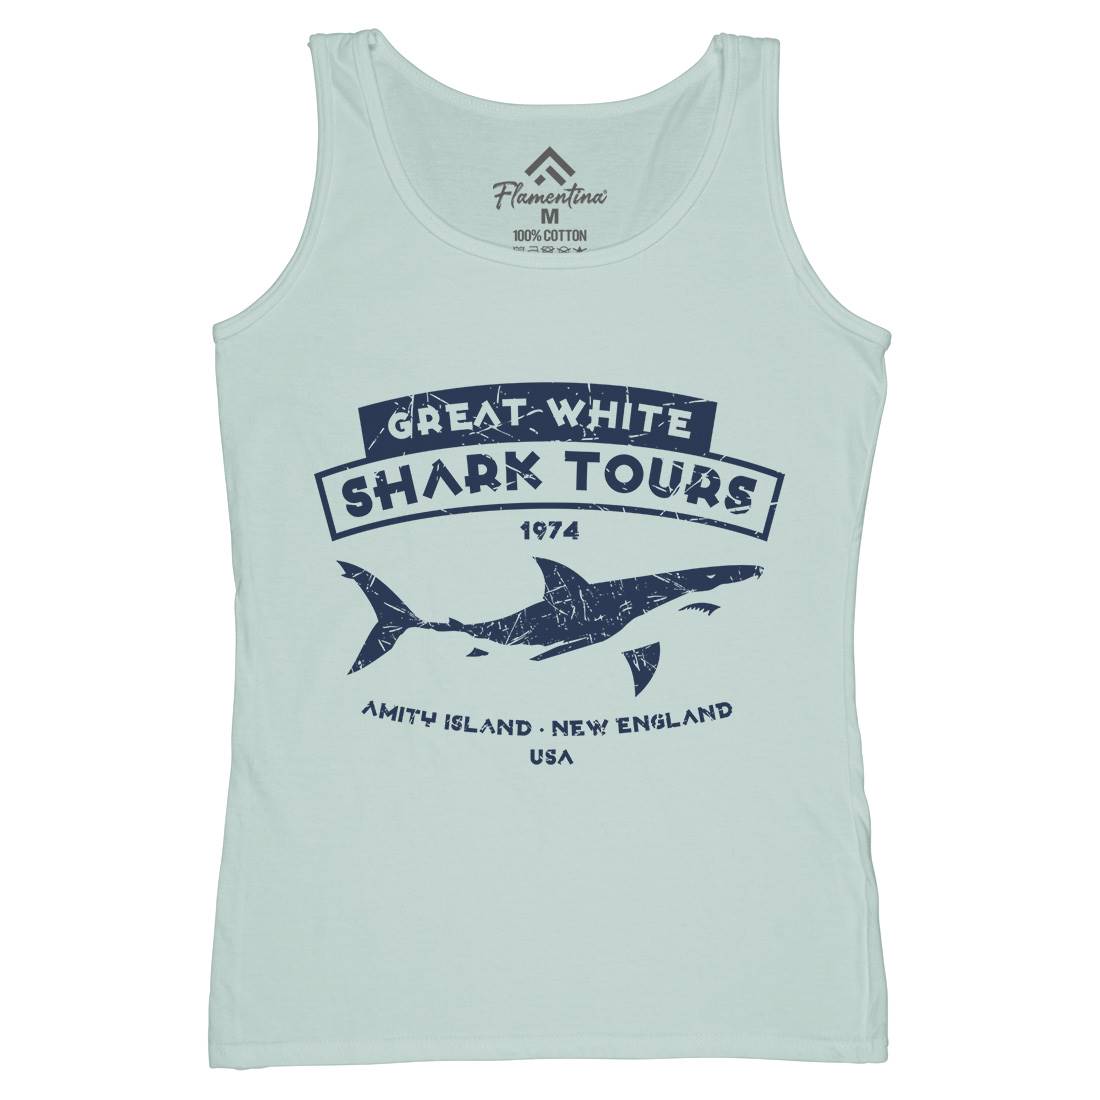 Great White Shark Tours Womens Organic Tank Top Vest Navy D348